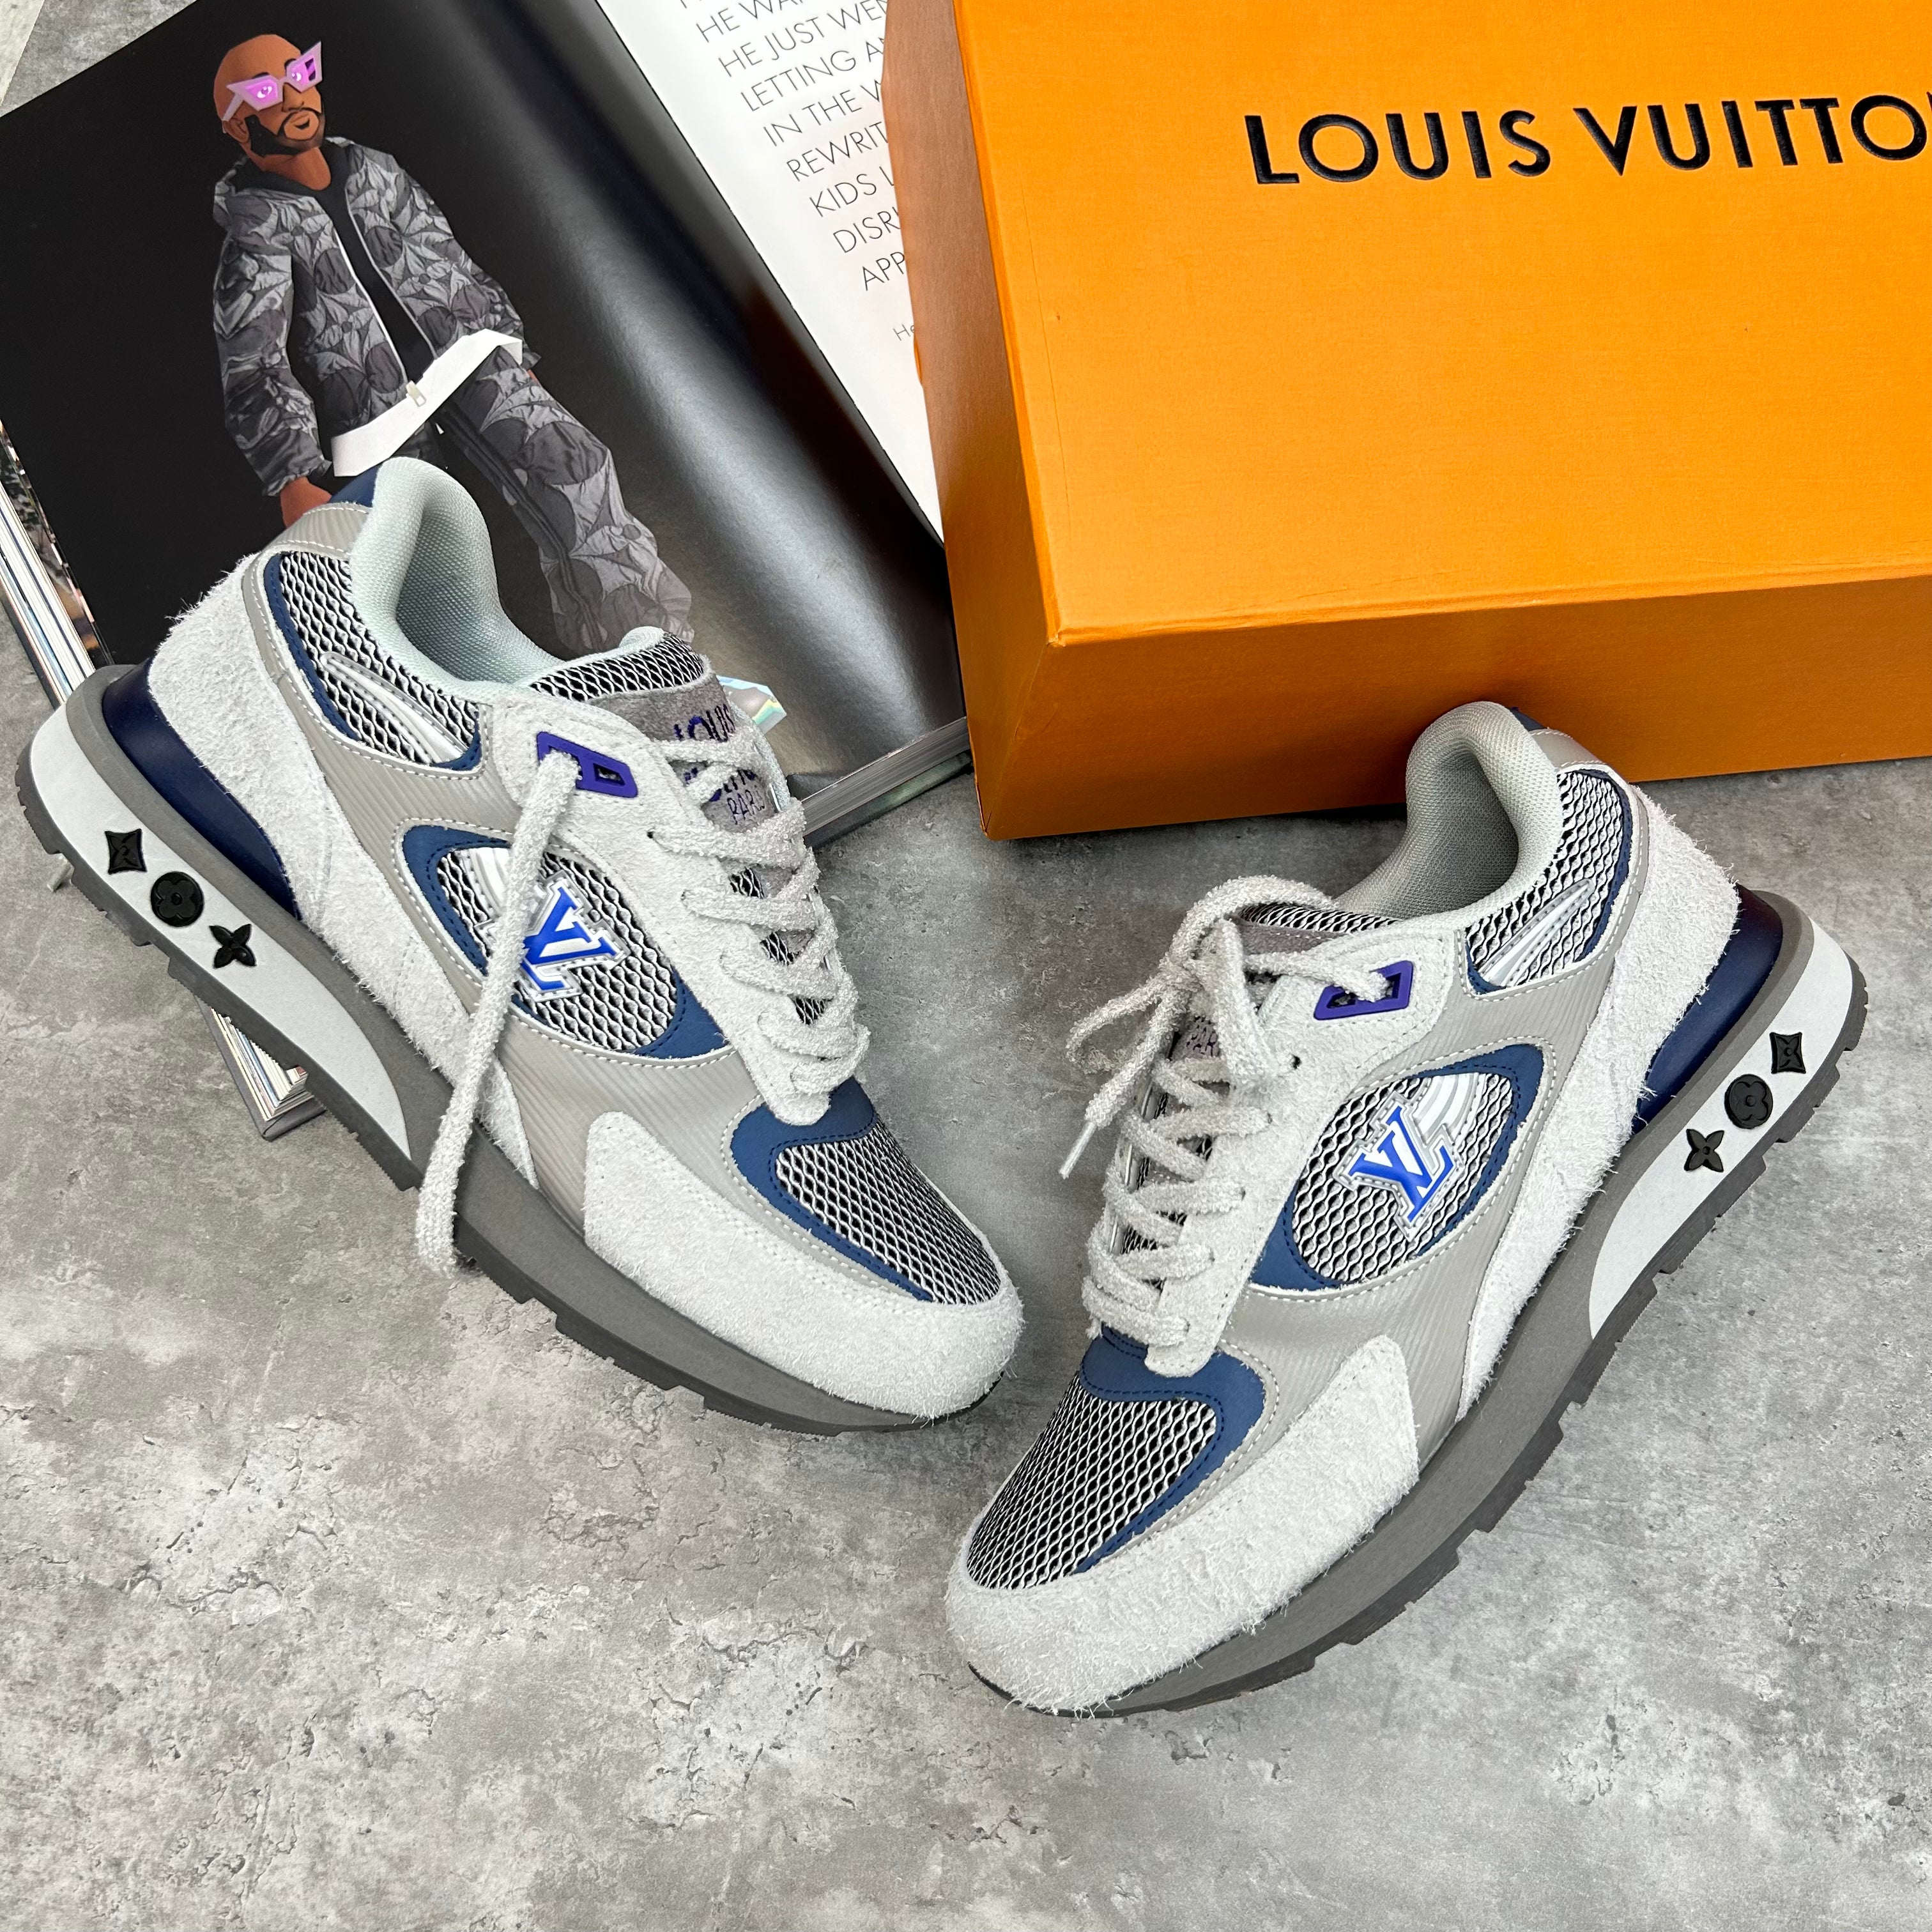 LOUIS VUITTON Luxembourg line / low cut sneakers / UK6.5 / YLW